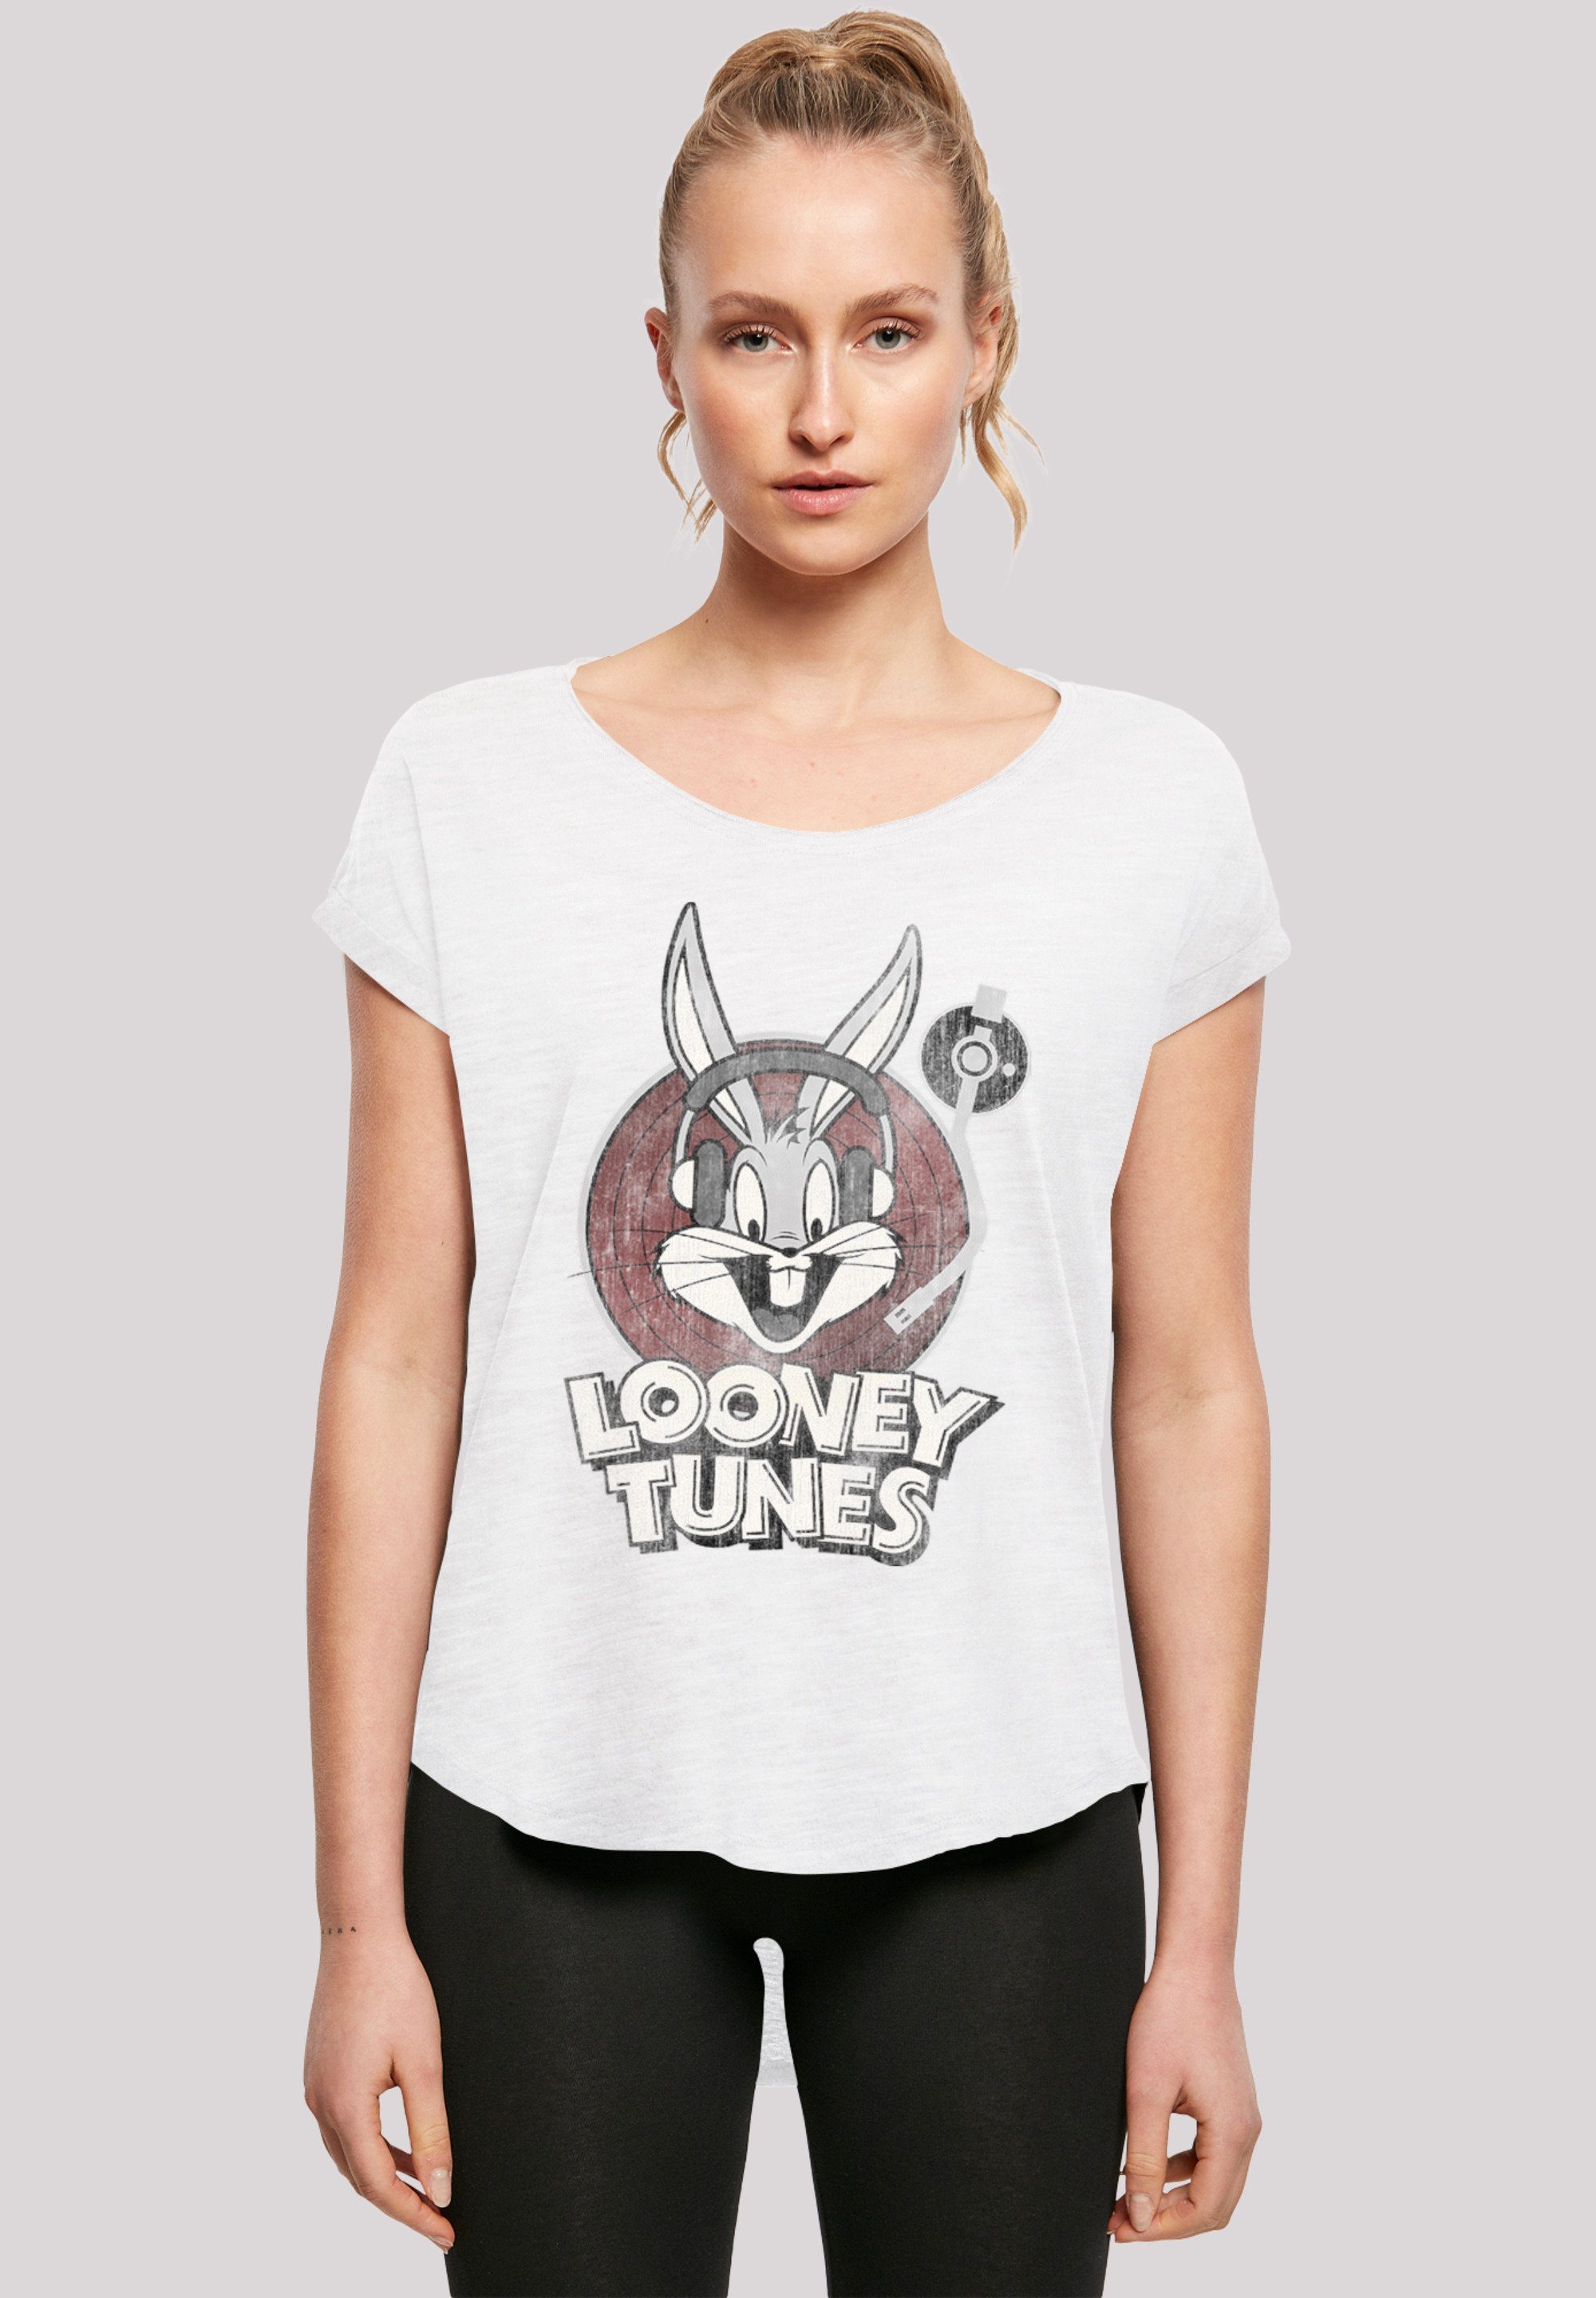 F4NT4STIC T-Shirt Looney extra Bunny\' Tunes lang Hinten Print, Damen T-Shirt Bugs geschnittenes